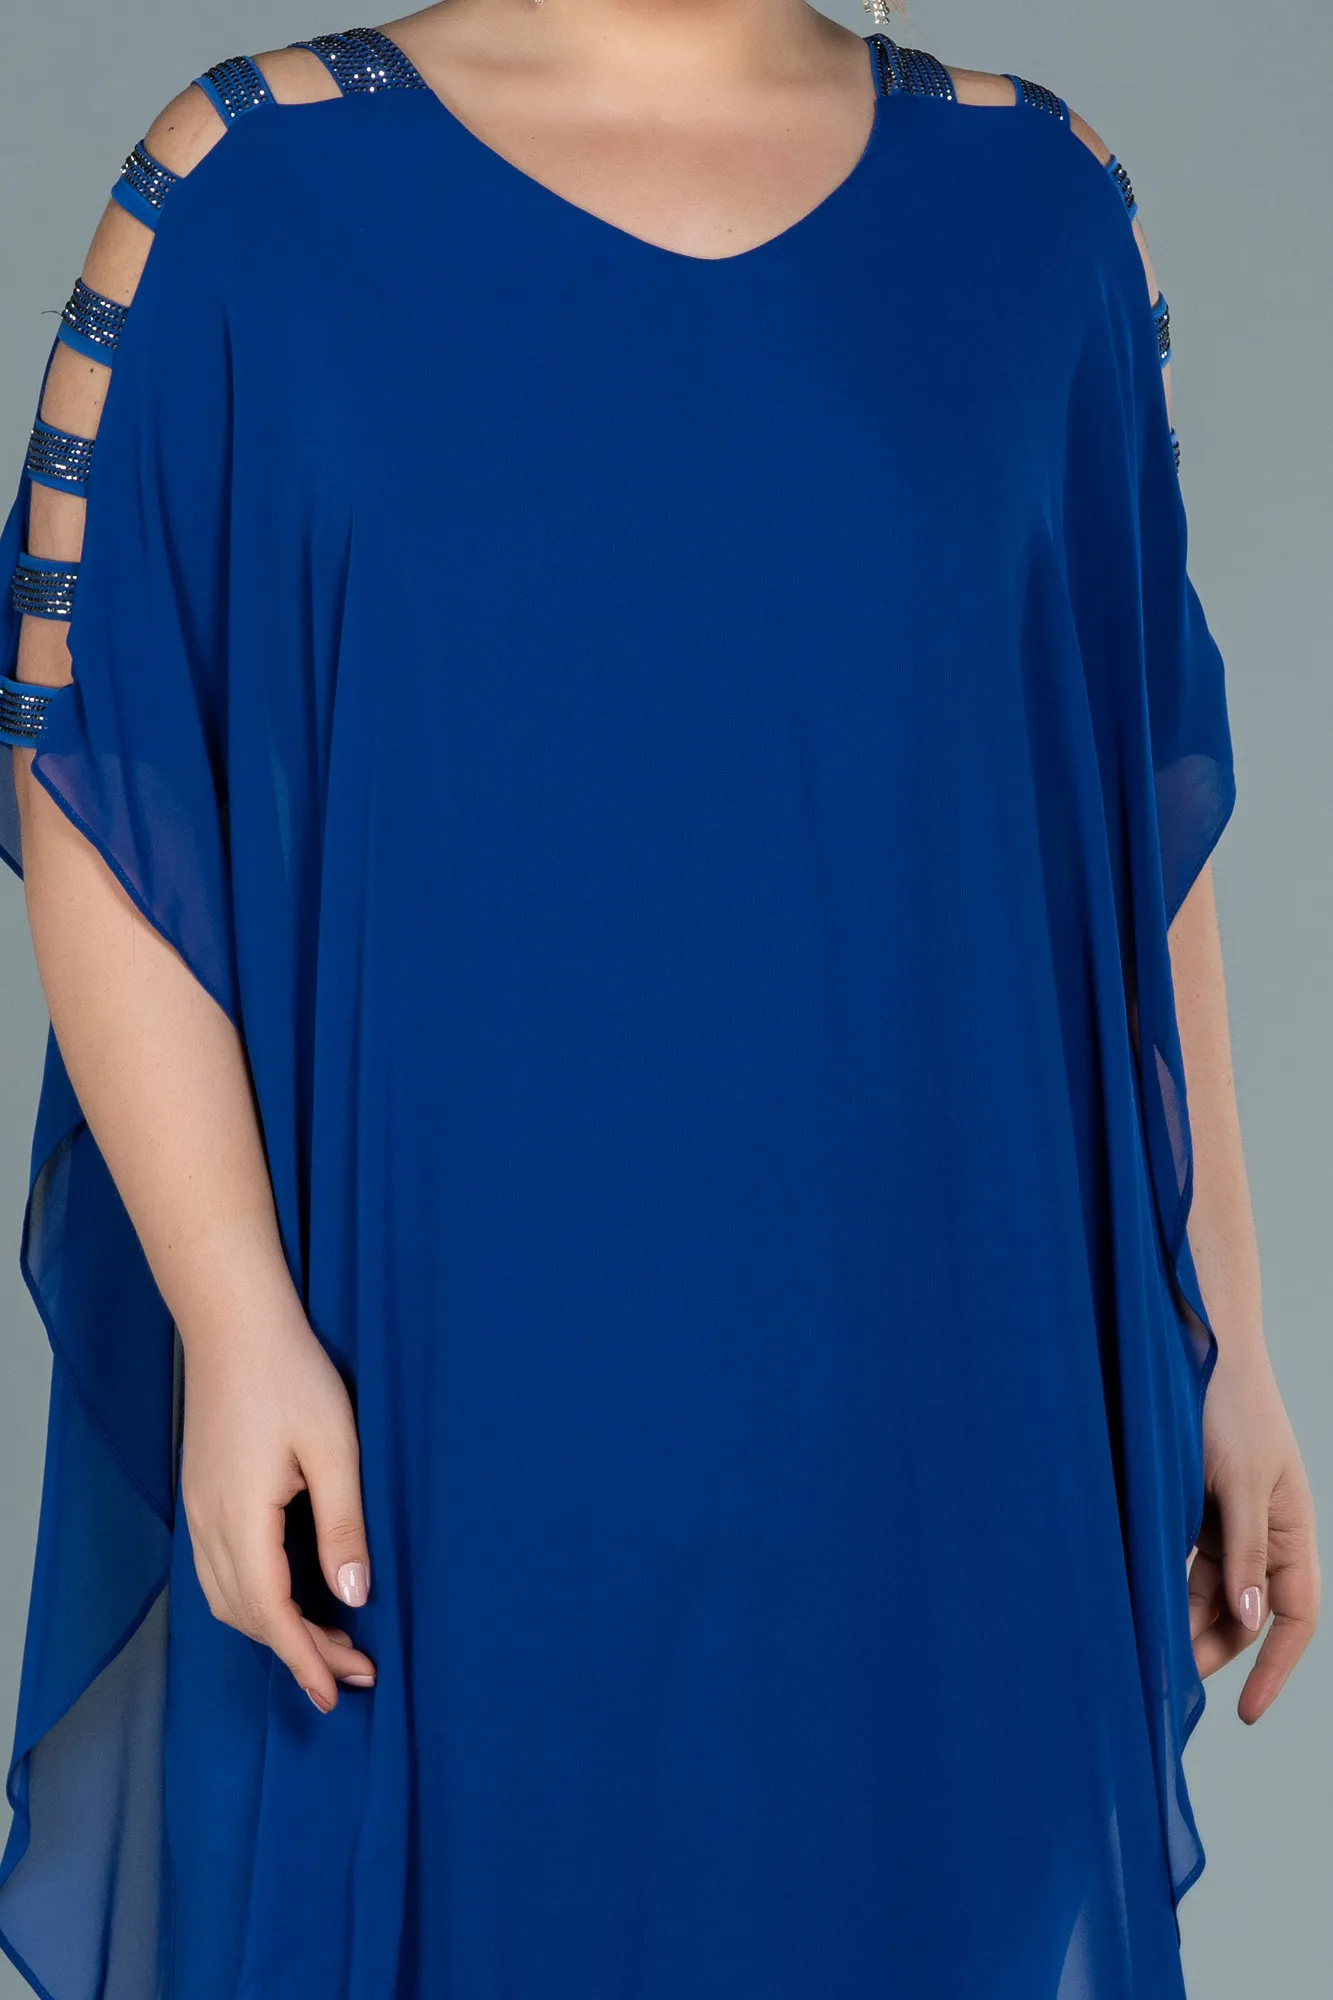 Sax Blue-Chiffon Plus Size Evening Dress ABT080